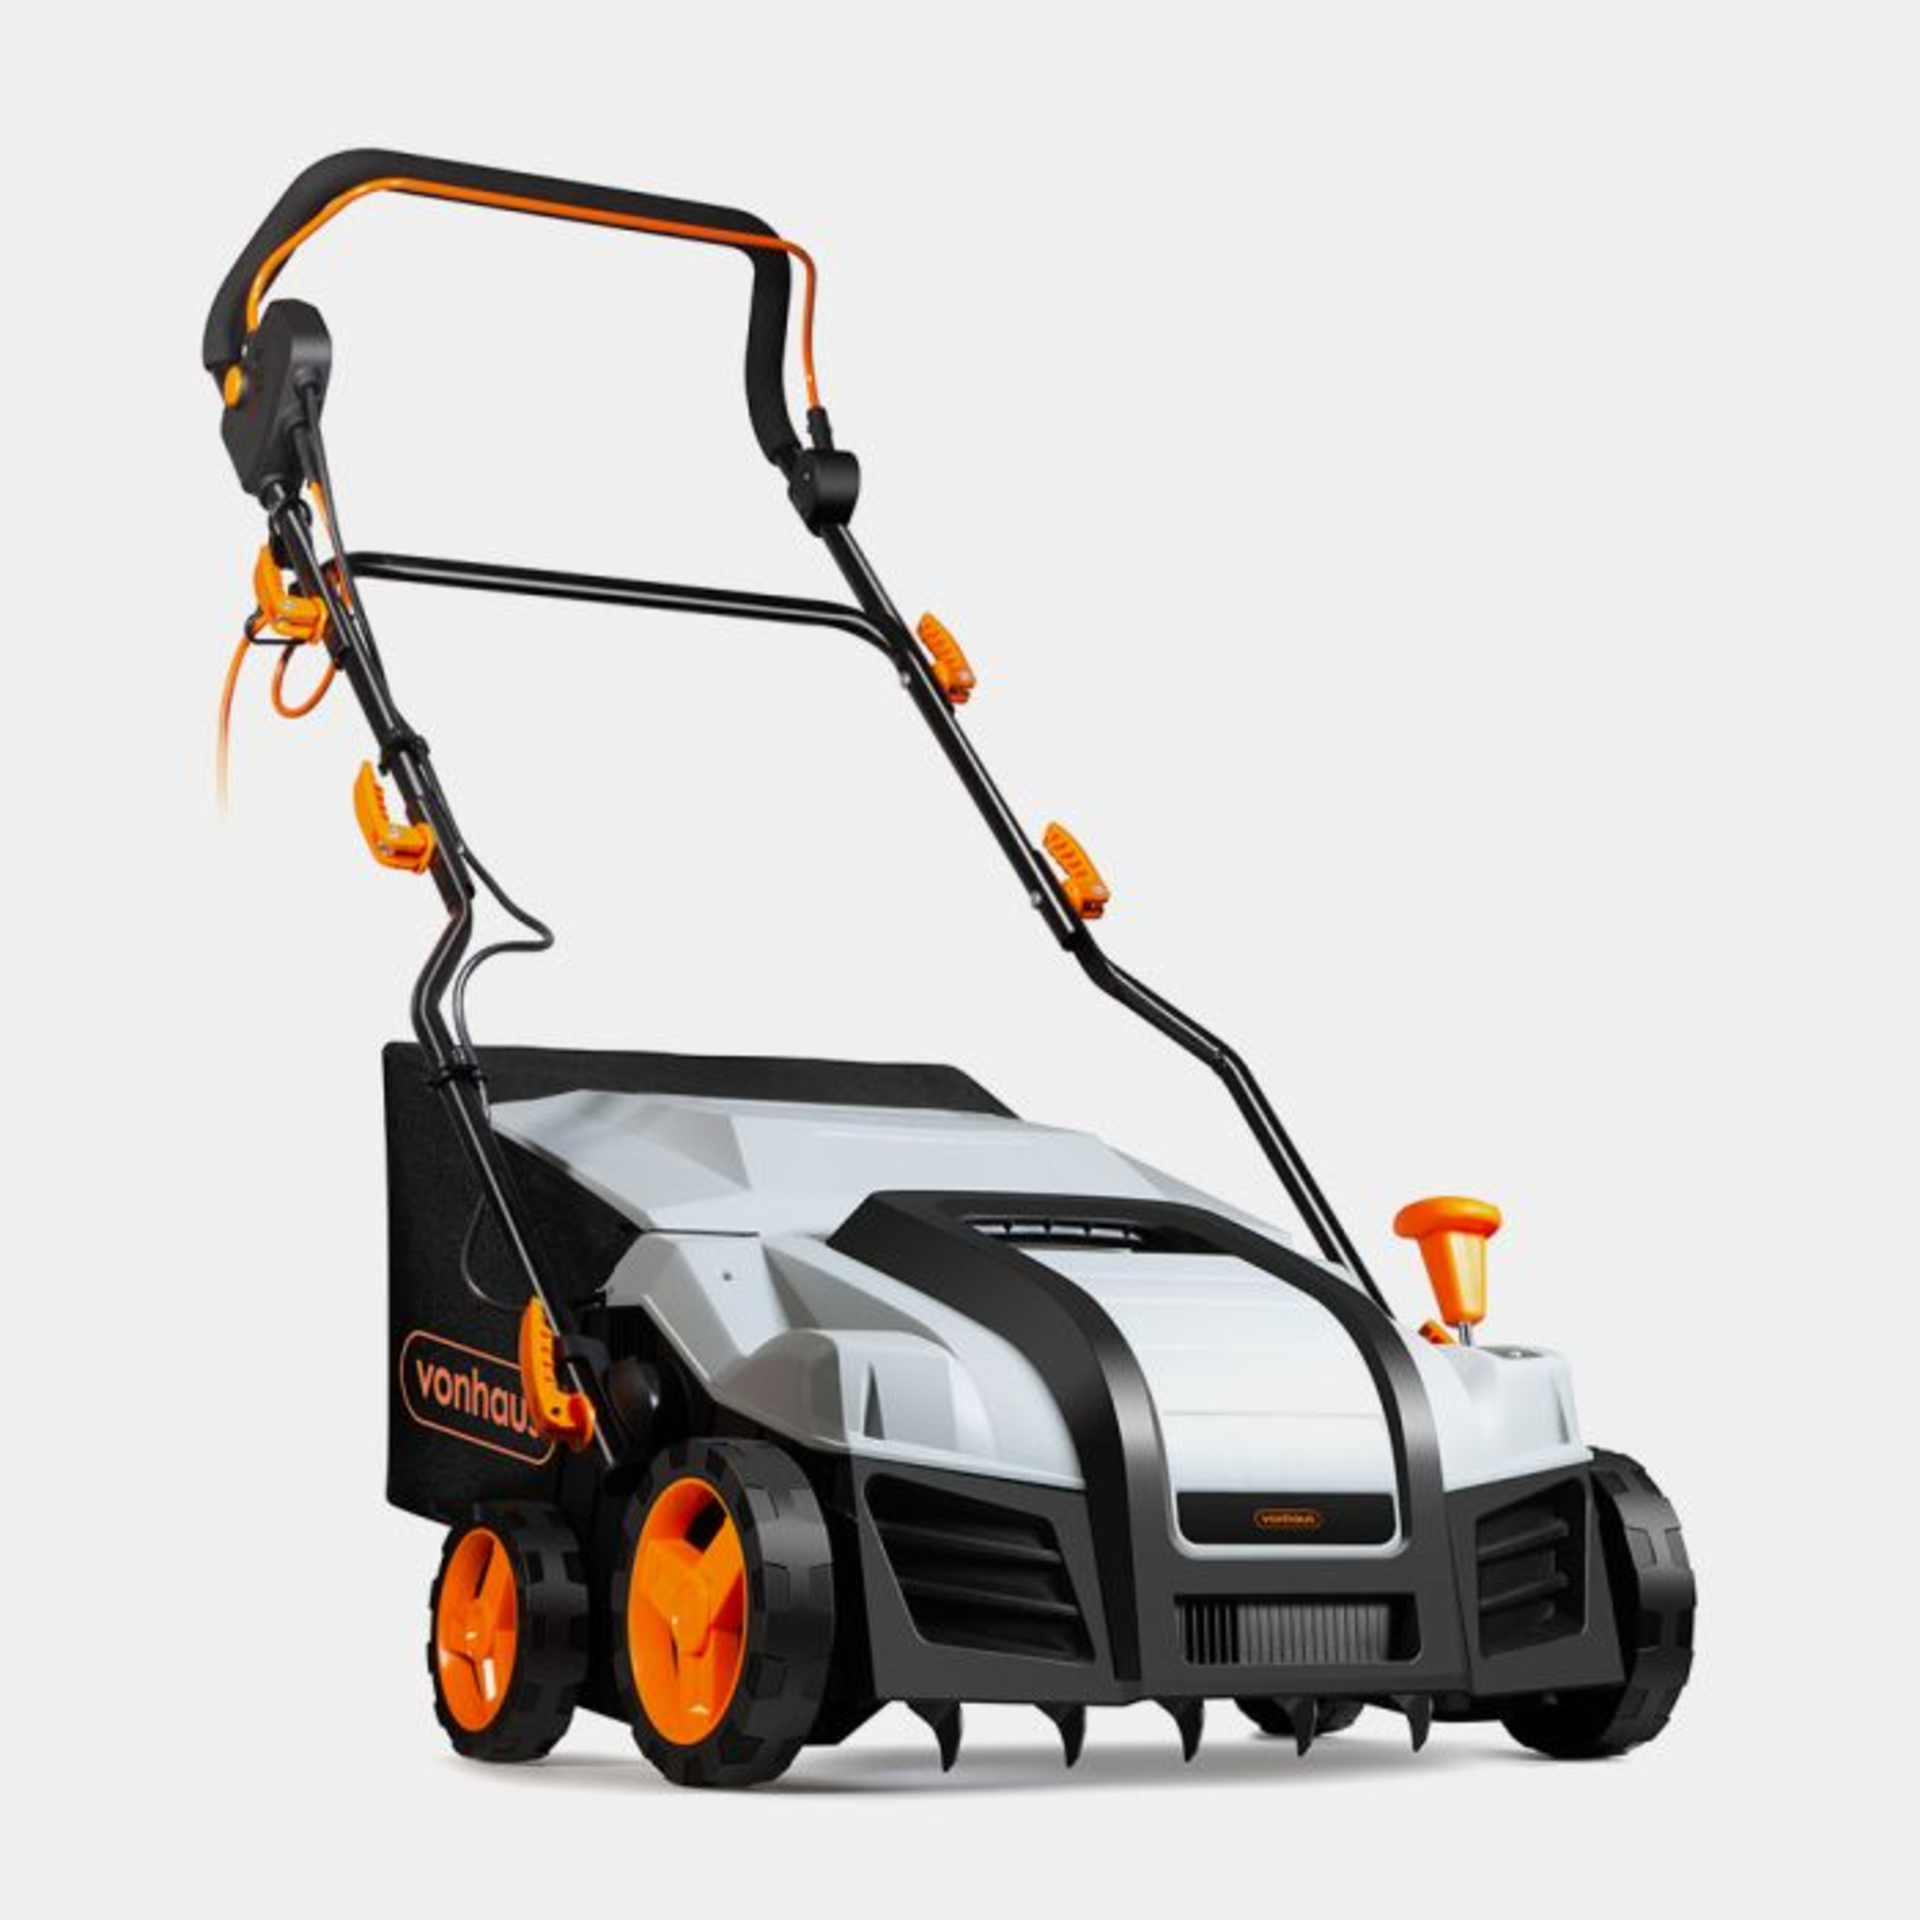 Luxury Lawn Scarifier, Aerator, Rake Electric 1800W – Dethatch & Rake Grass (ER32) Luxury Lawn